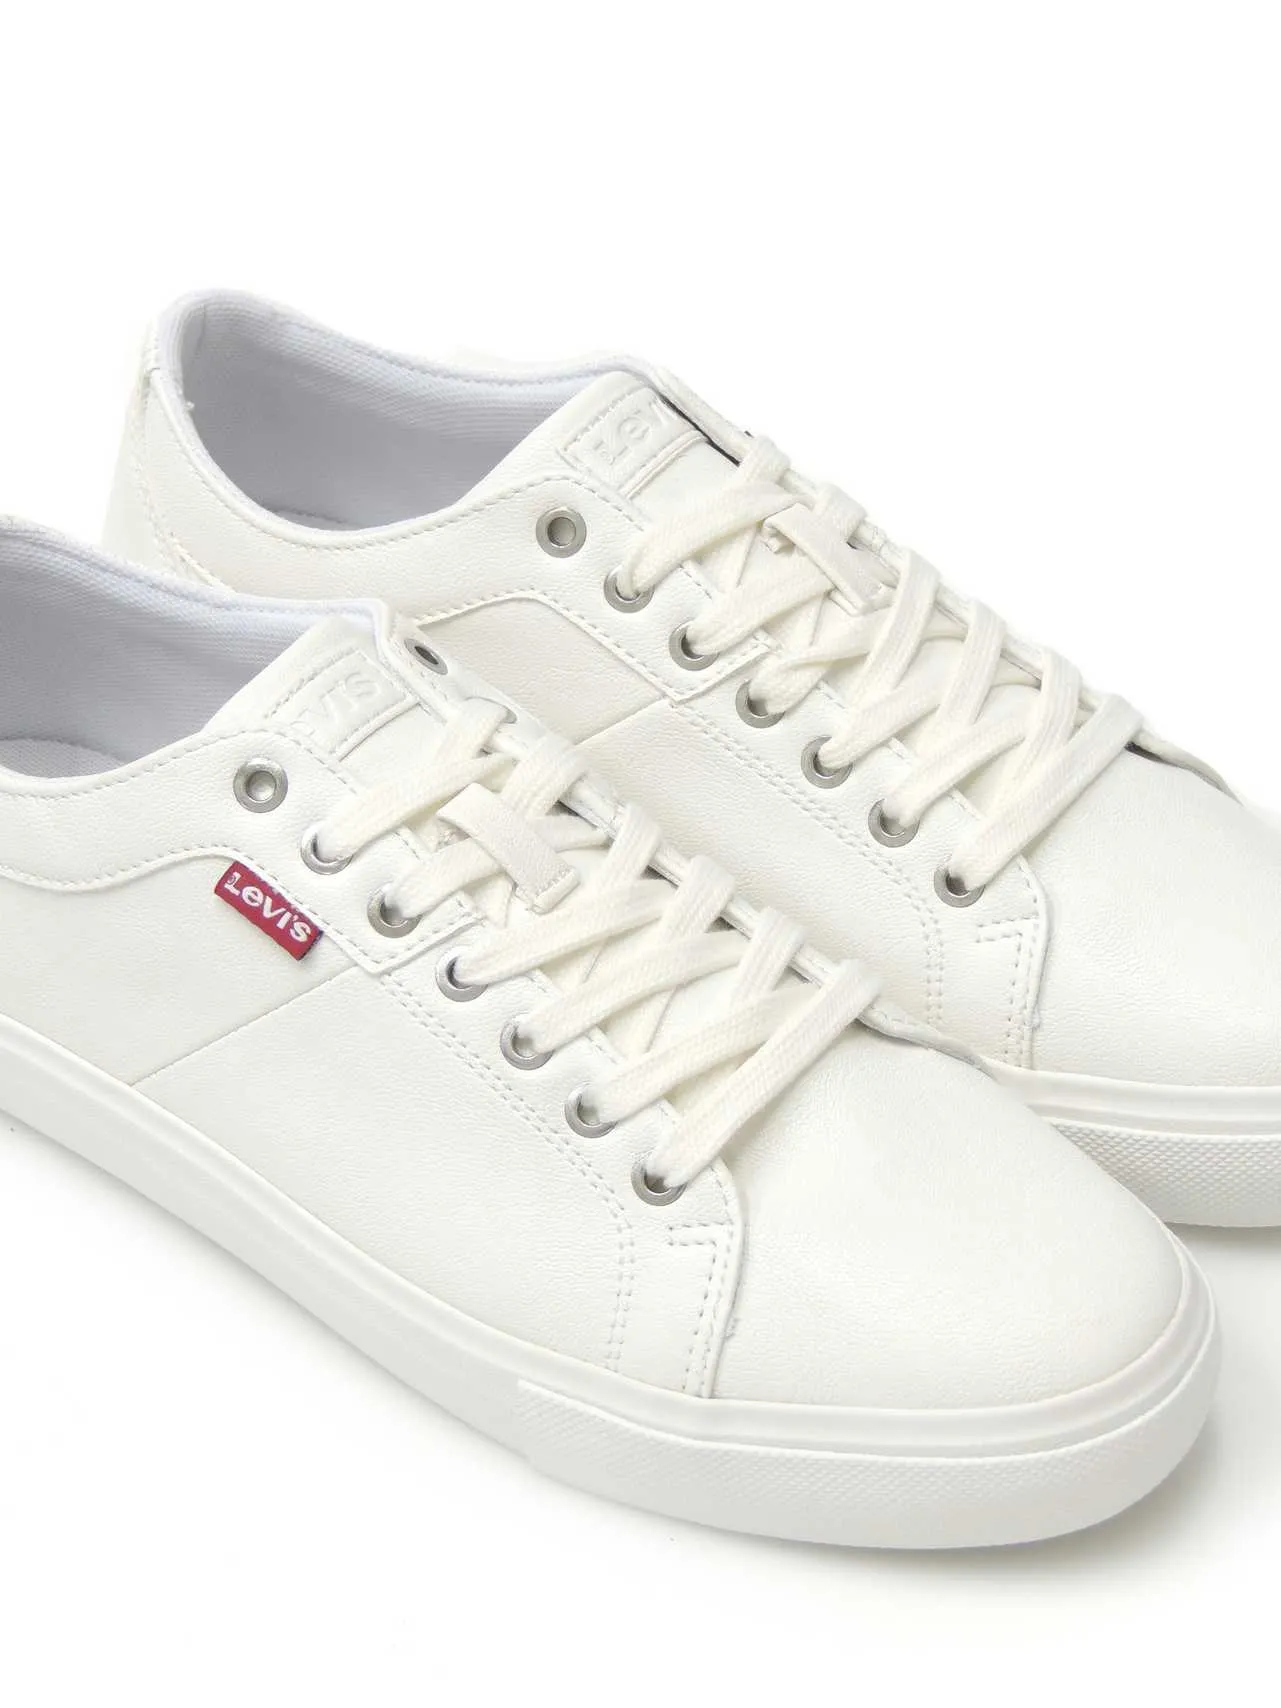 sneakers--levis-231571-polipiel-blanco